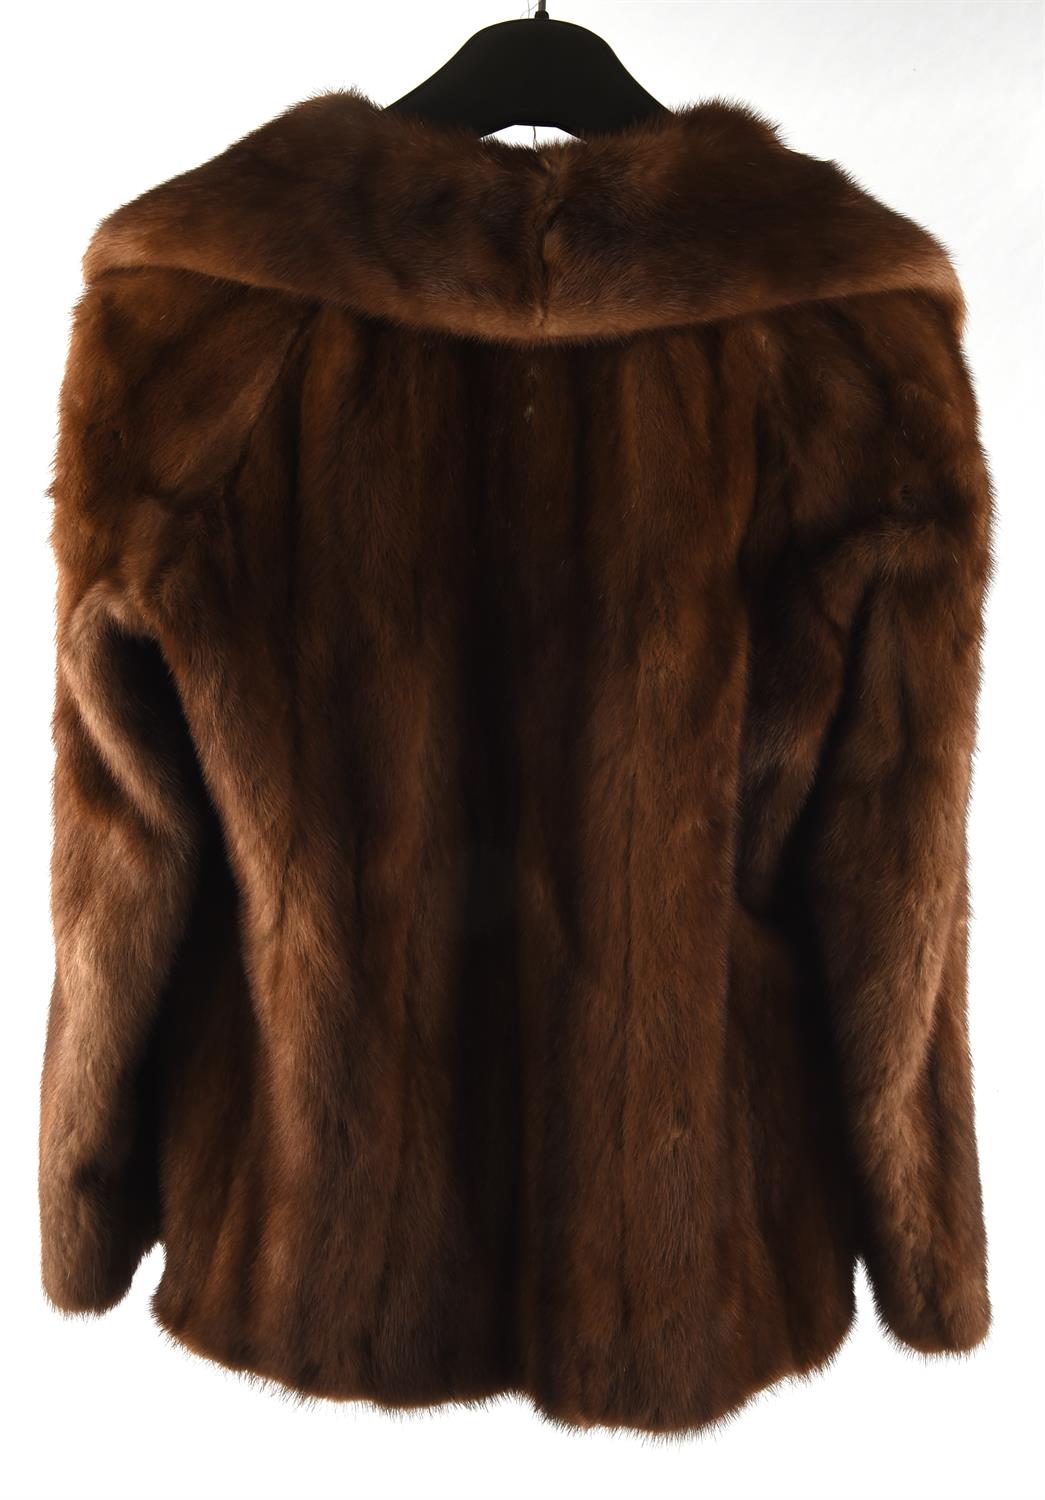 MINK Pastel fur jacket with original receipt for £1500 dated 1982 (Fits UK12) - Image 2 of 3